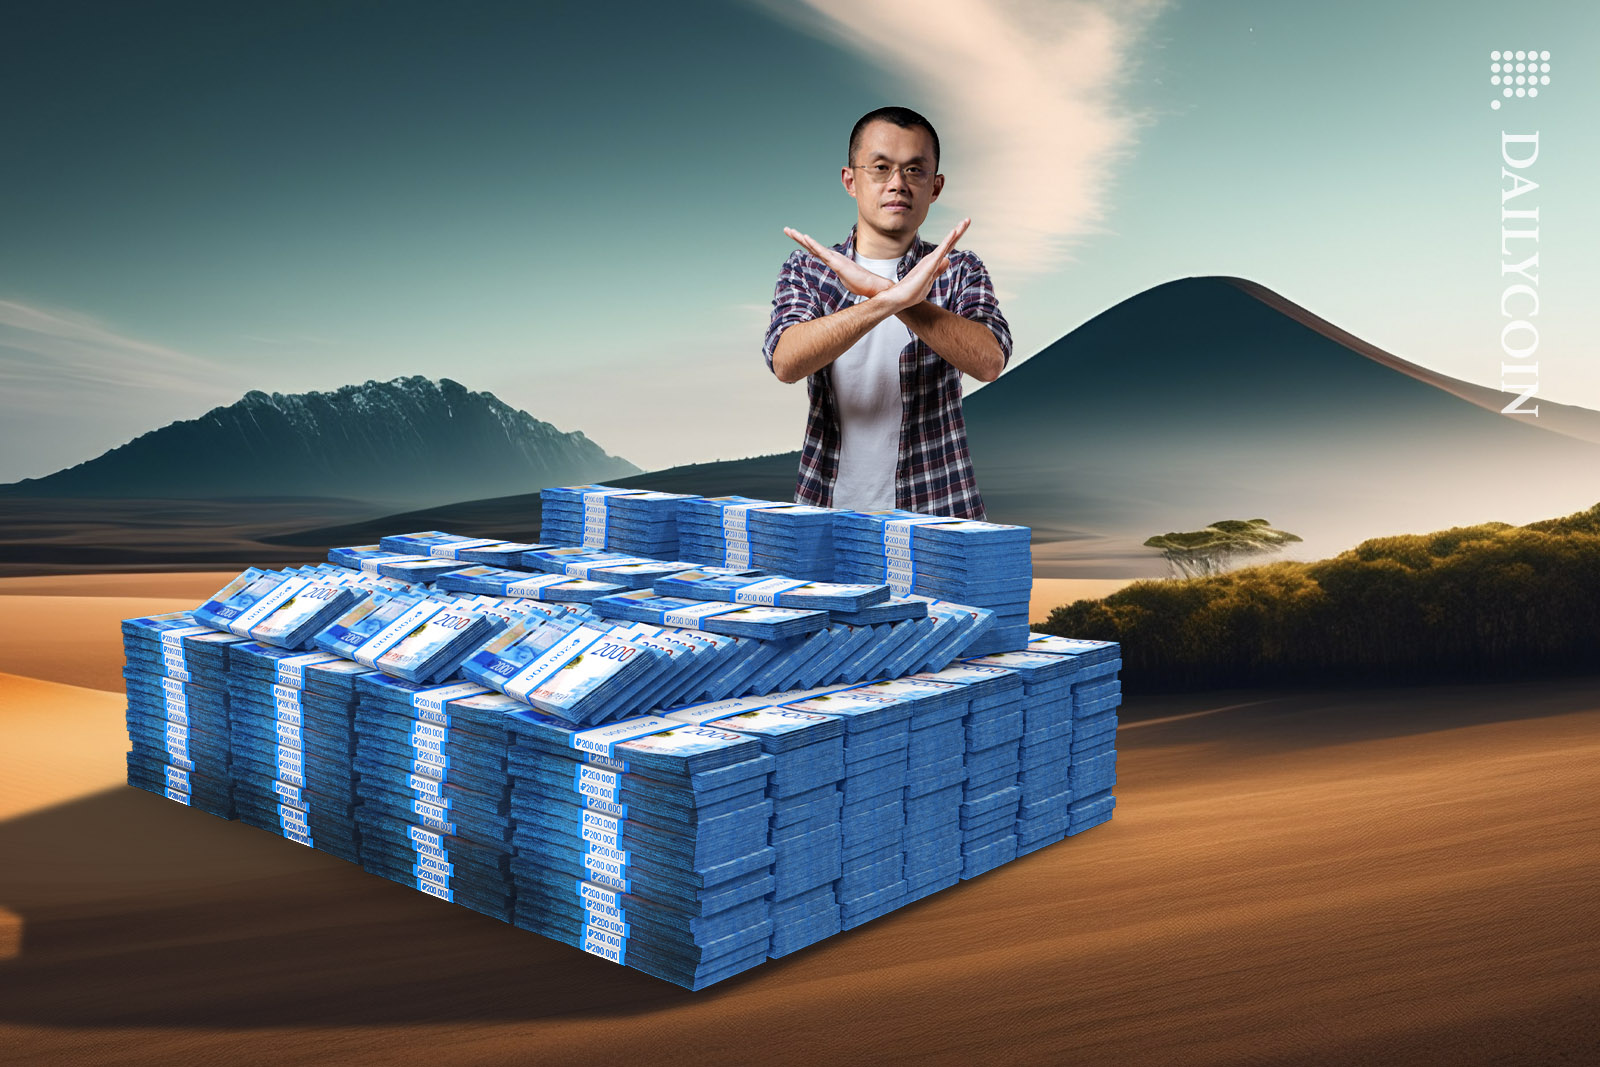 Changpeng Zhao Standing behing a huge pile of Russian Ruble, signaling that he doesn't want it.